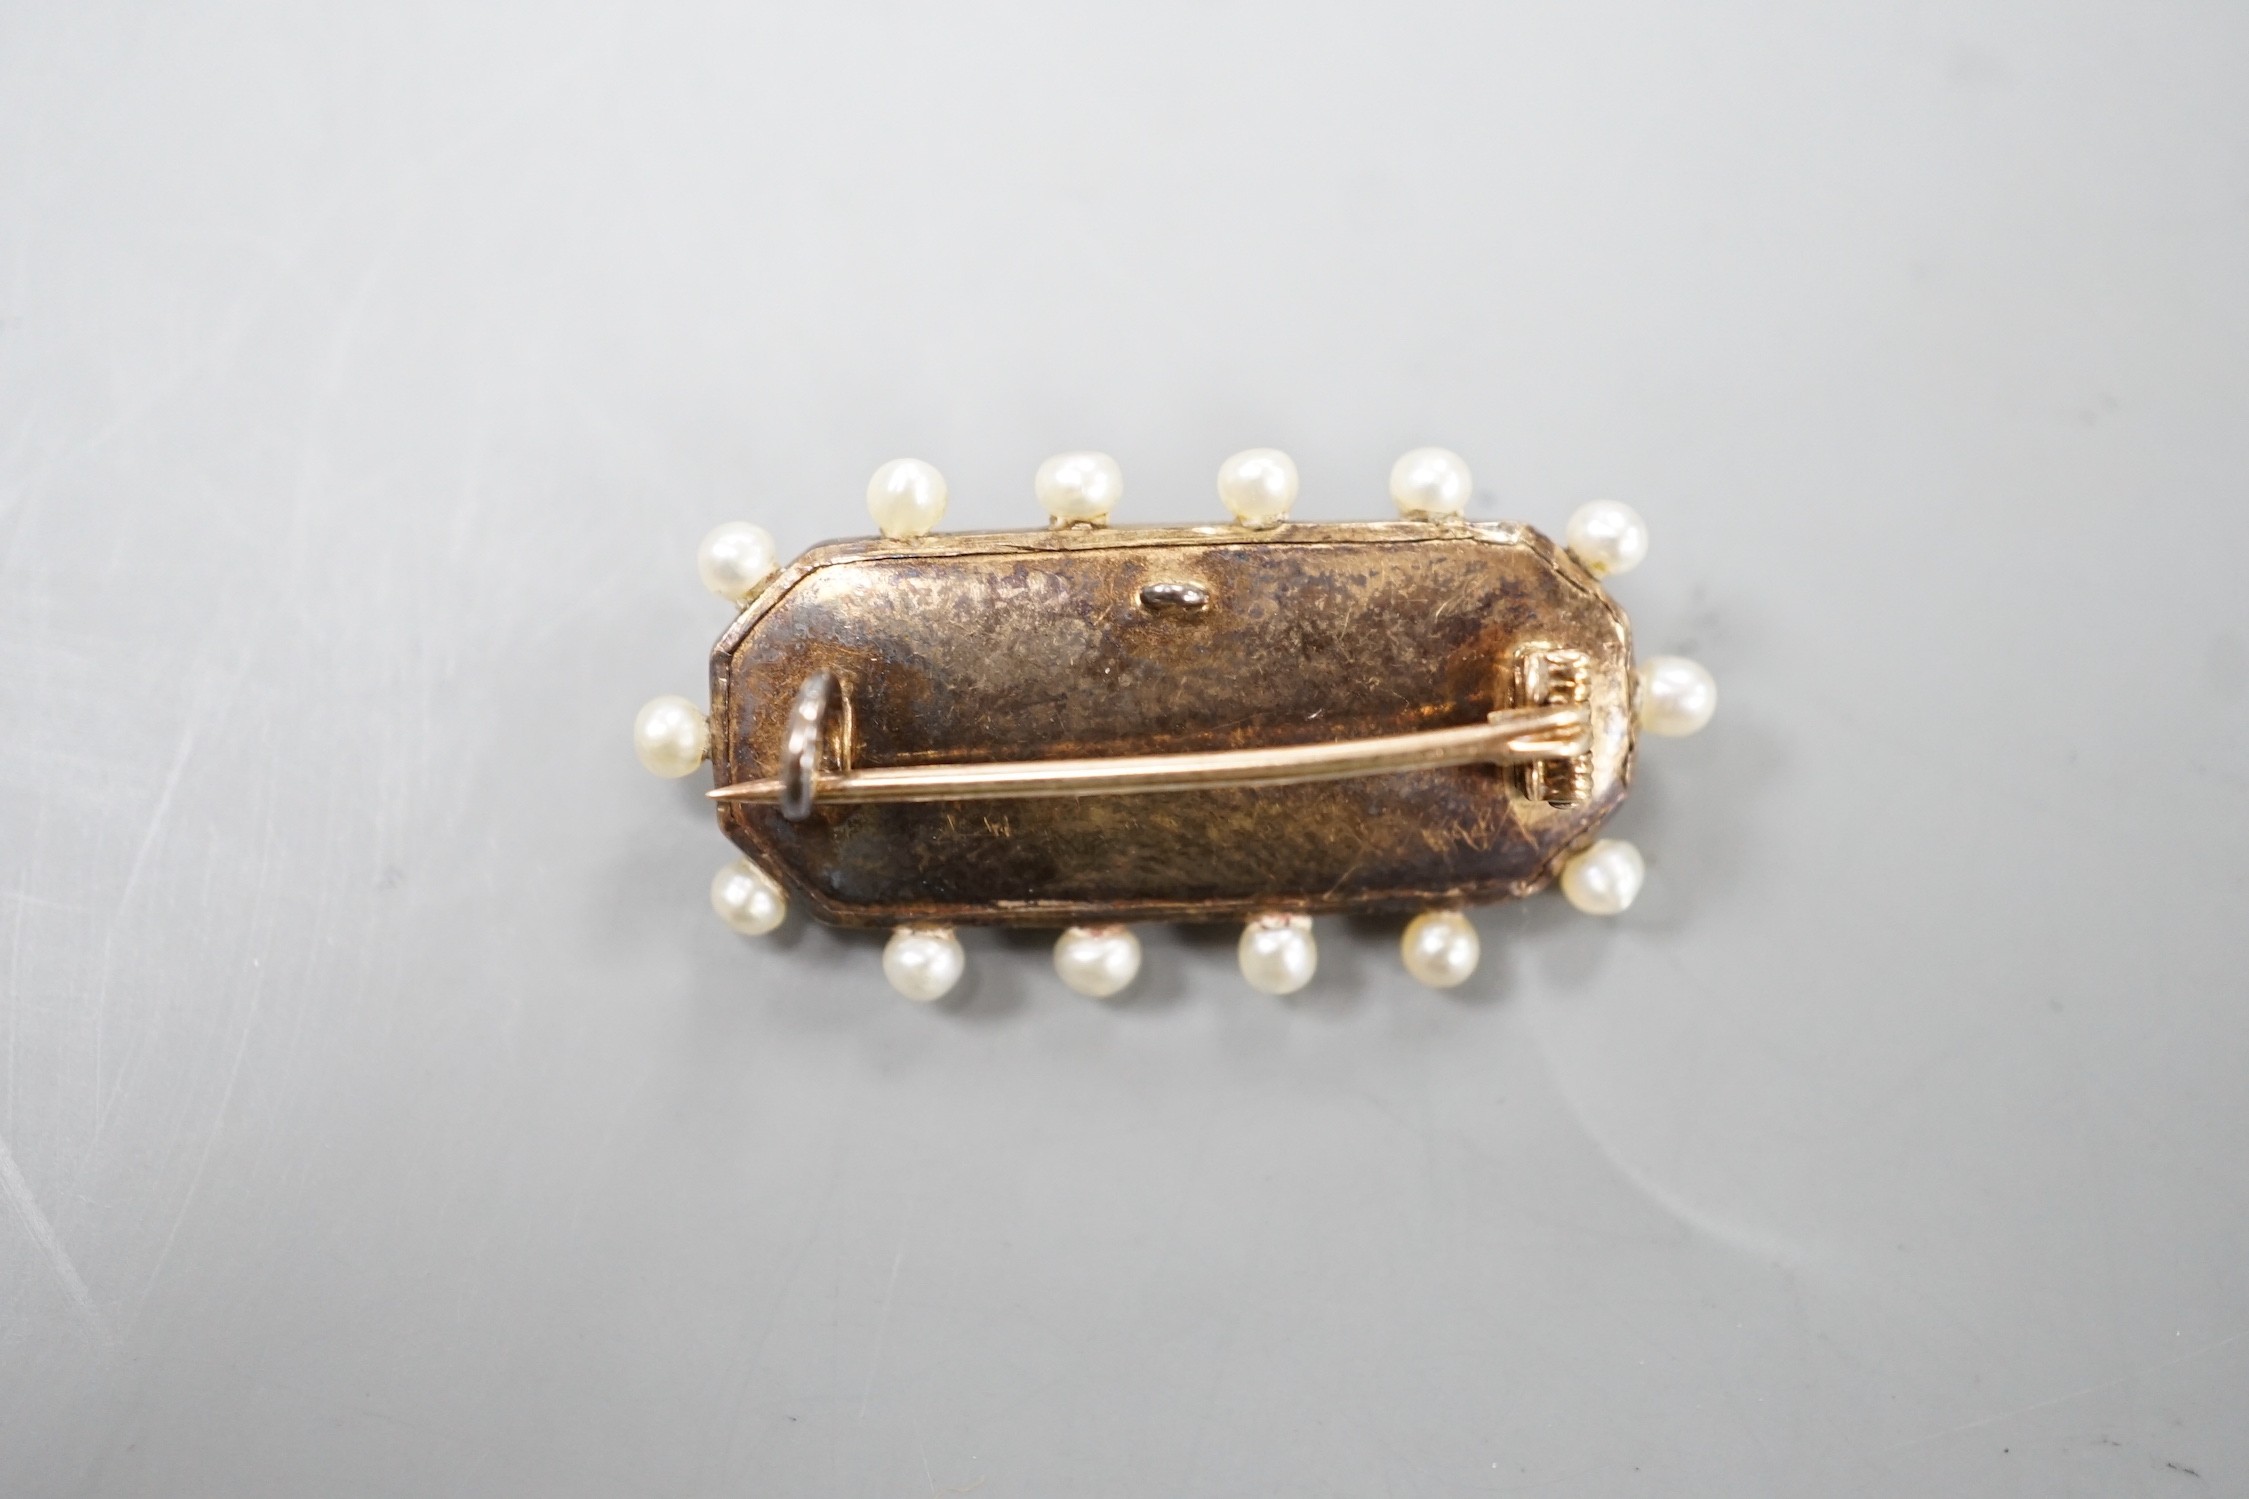 An Edwardian yellow metal, seed pearl, diamond and enamel set brooch, 31m, gross weight 5.4 grams.